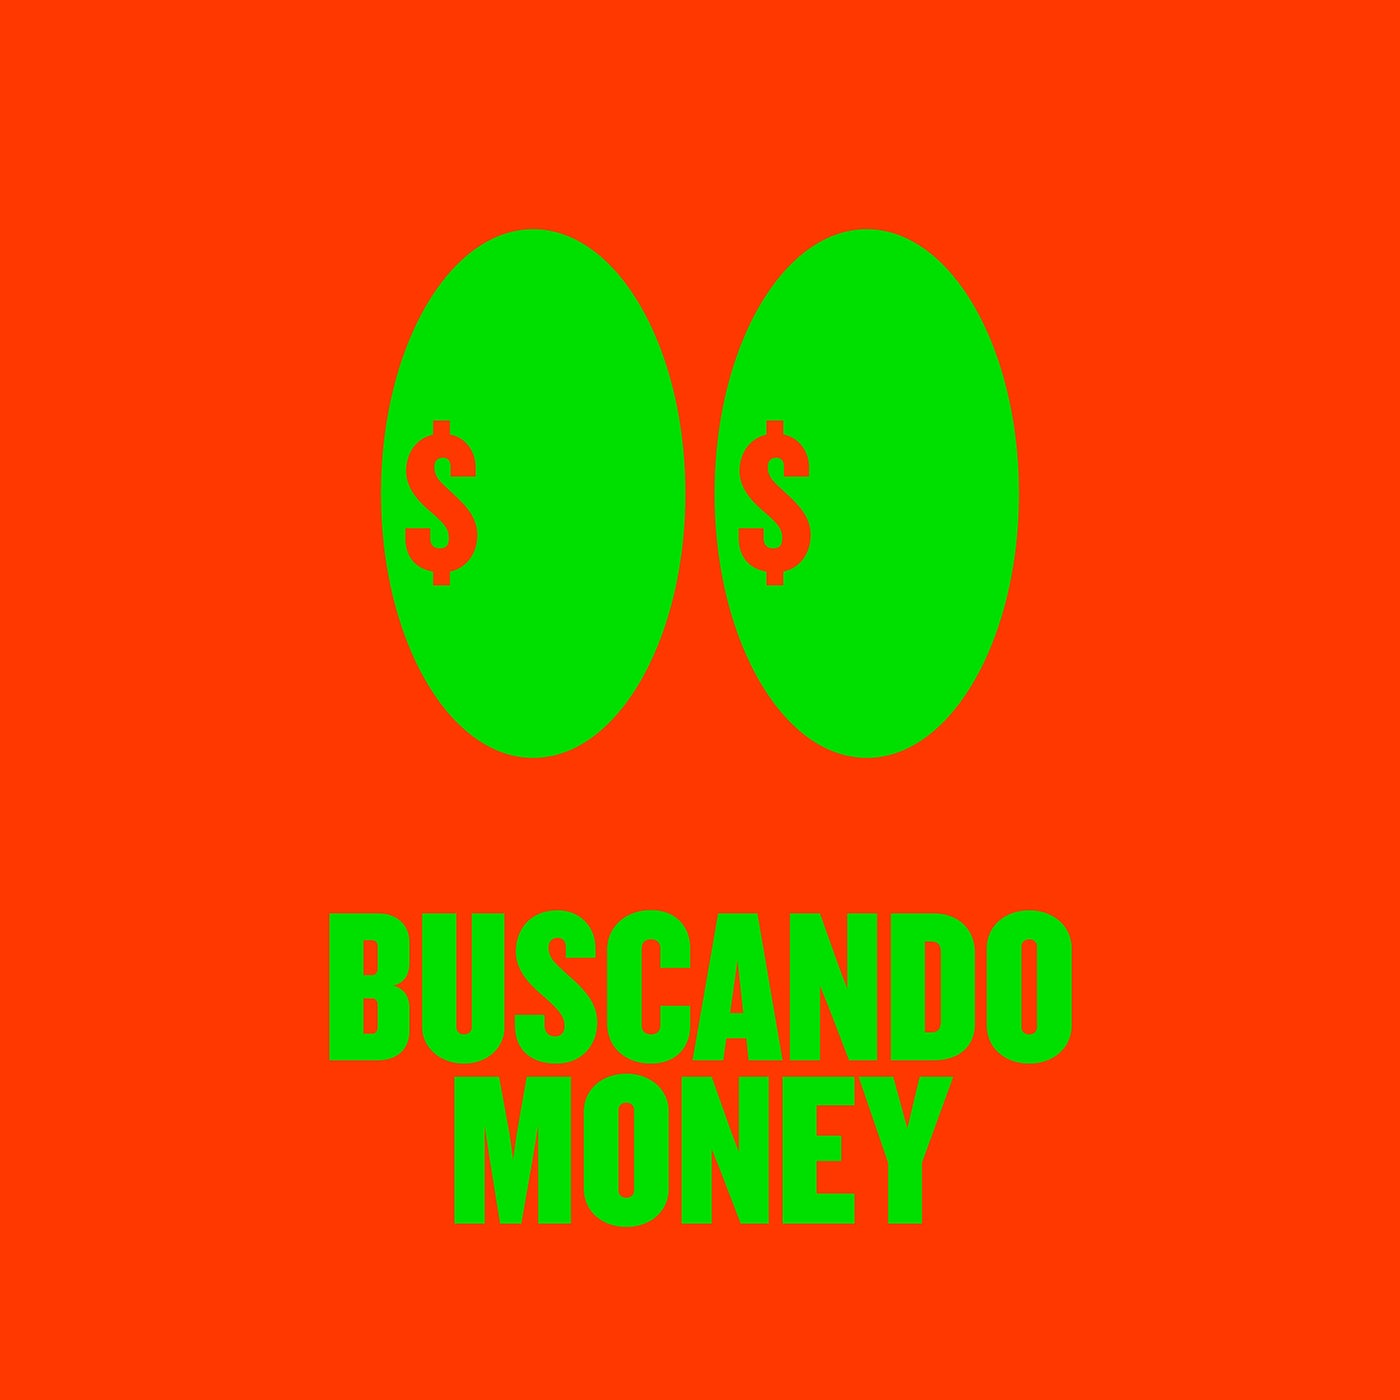 Buscando Money (with Sean Paul)